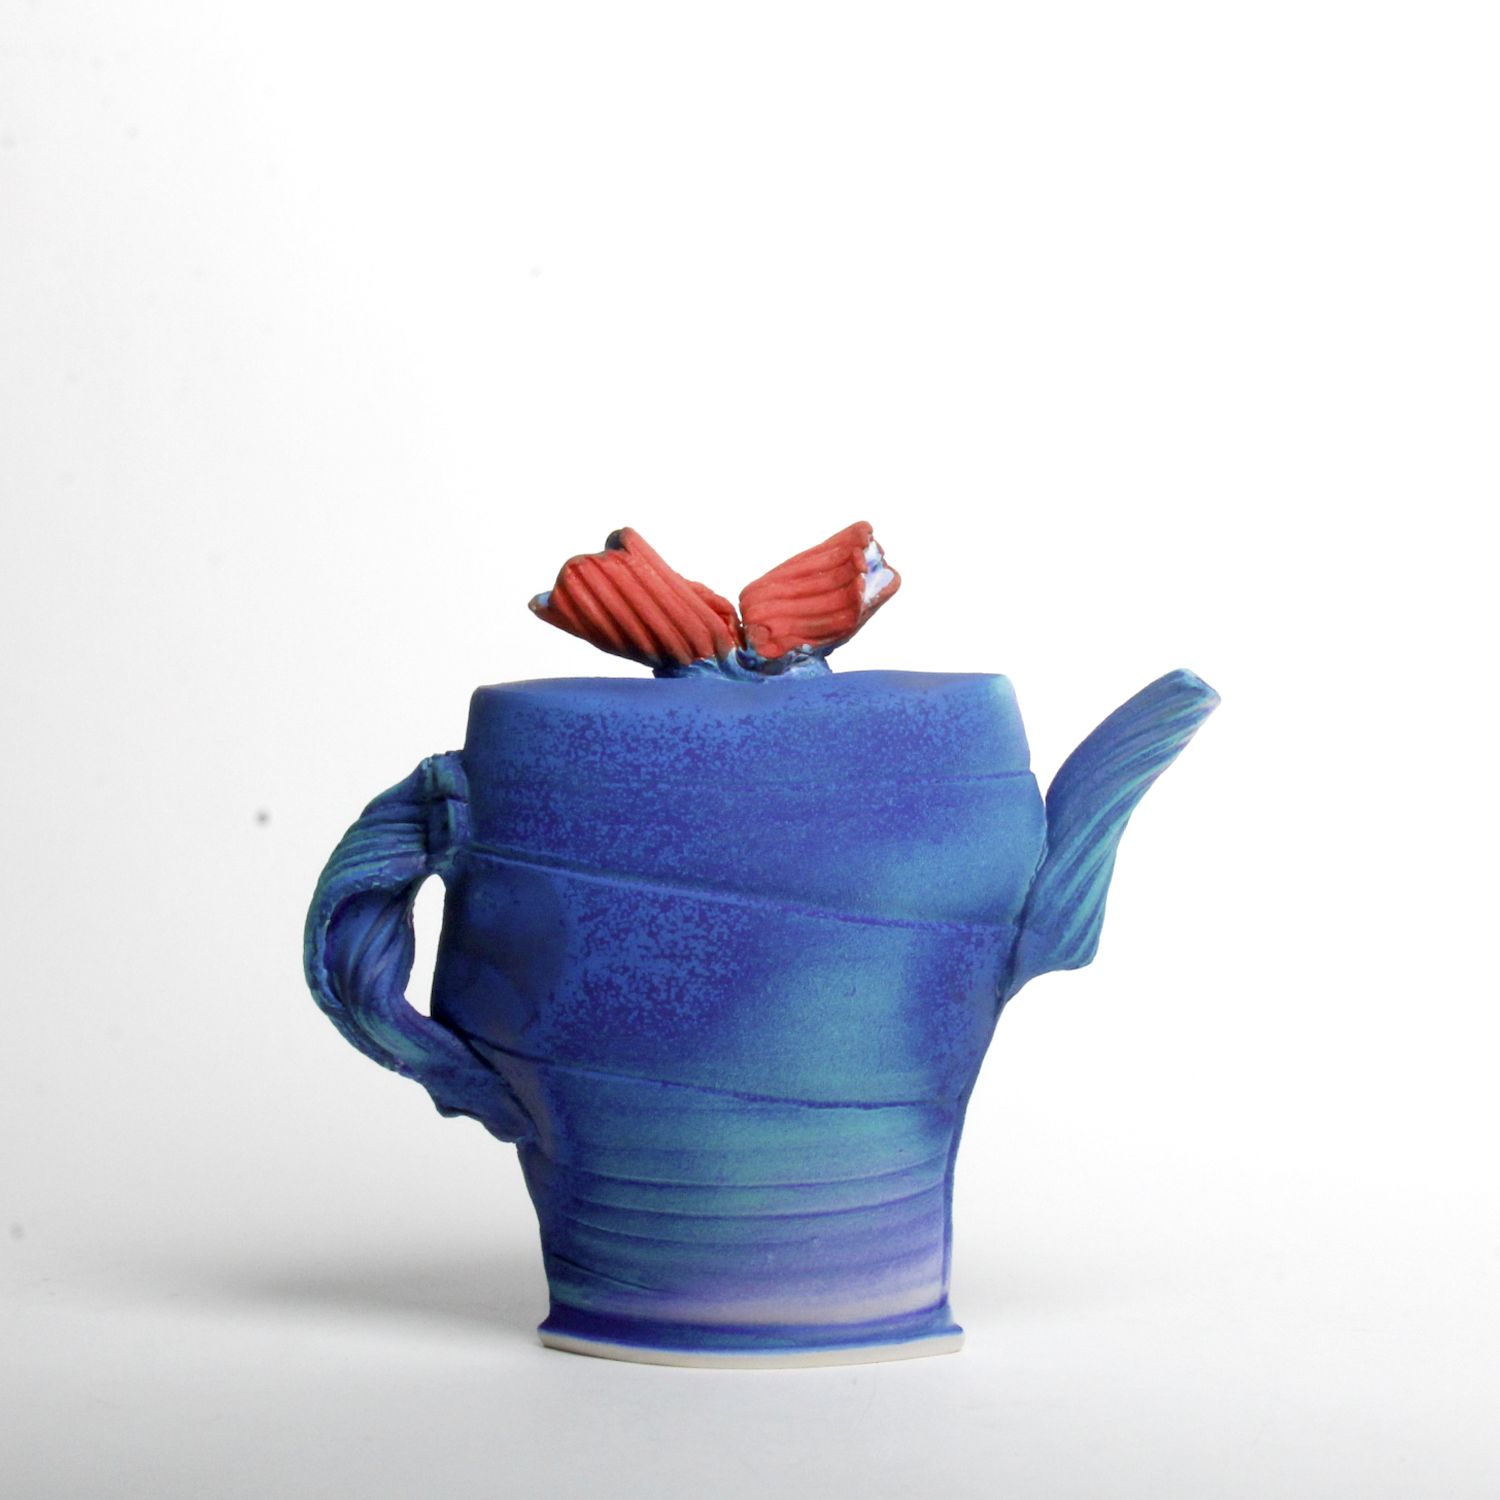 Shu-Chen Cheng: Blue Teapot Sculpture Product Image 1 of 2